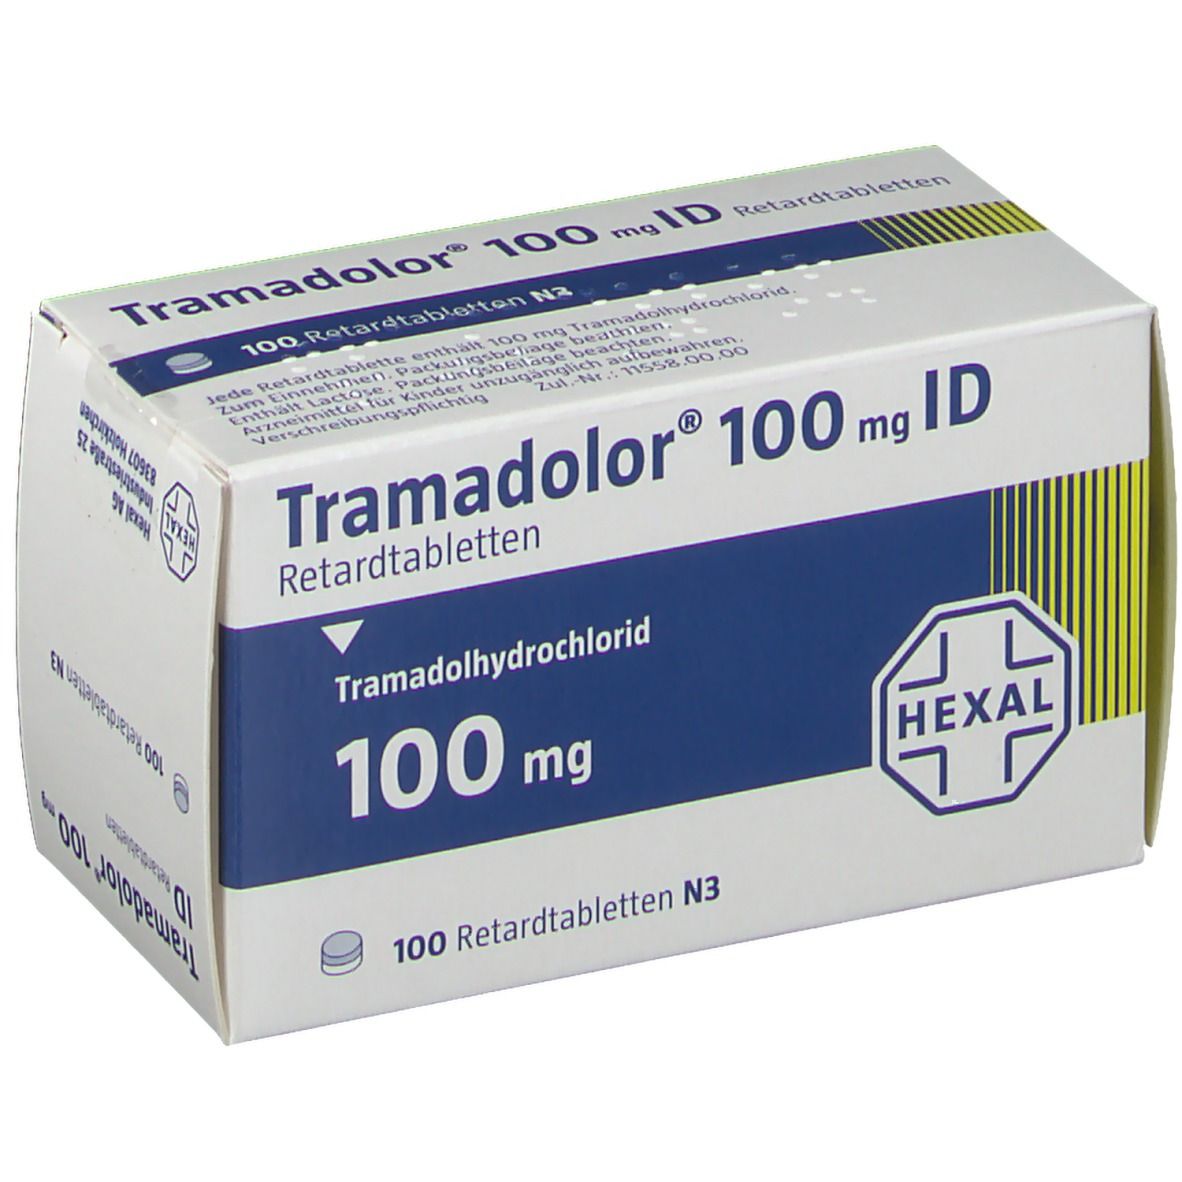 Tramadolor® 100 mg ID